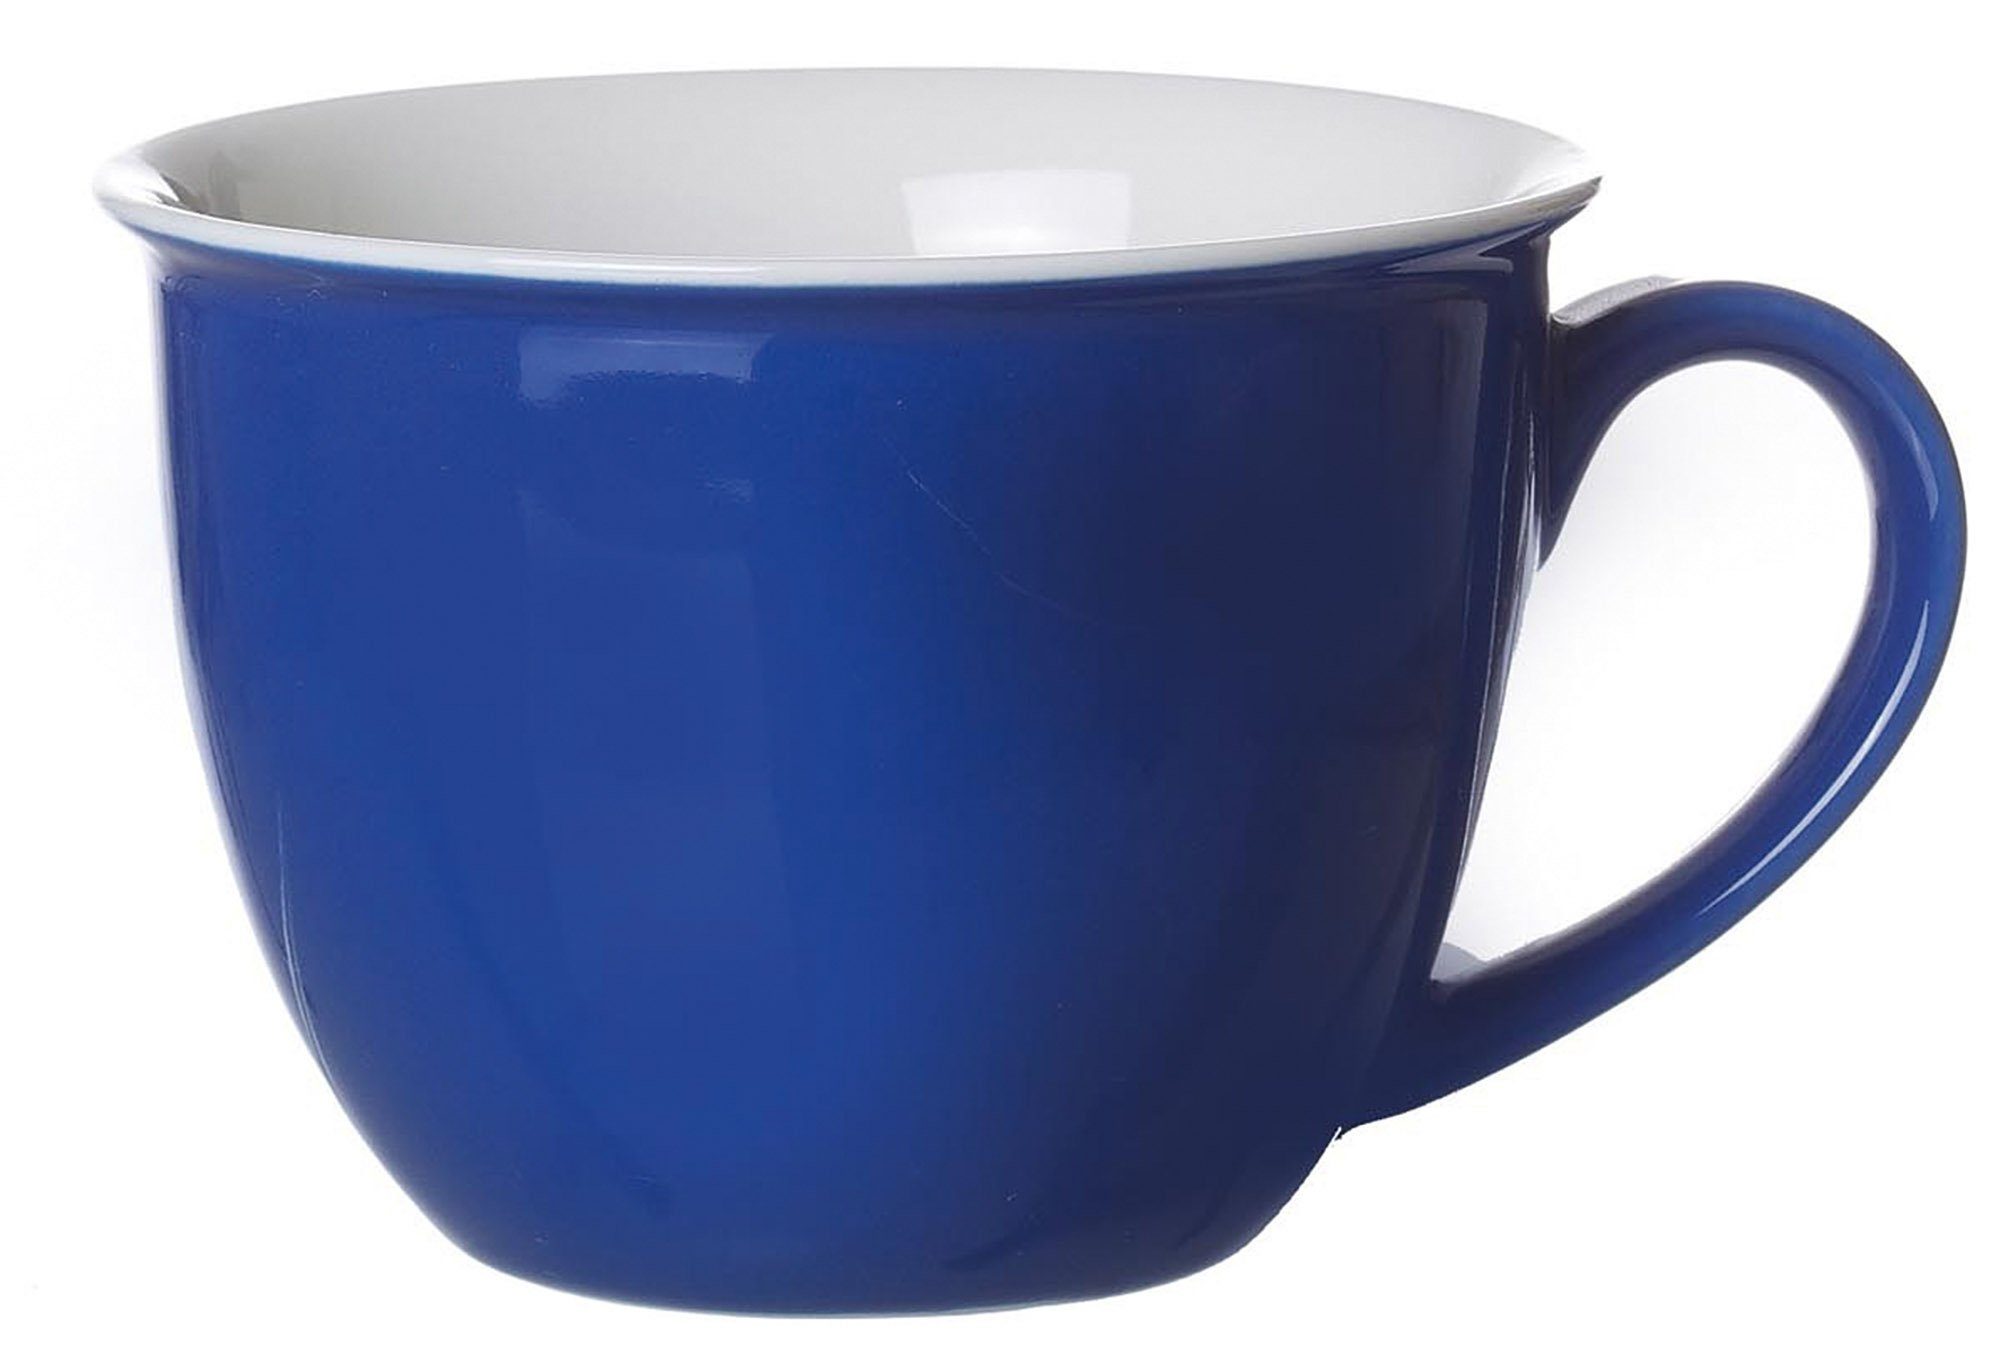 Ritzenhoff & Breker Tasse Porzellan Kaffeetasse Obertasse indigio-blau Milchkaffee Porzellan 350 ml